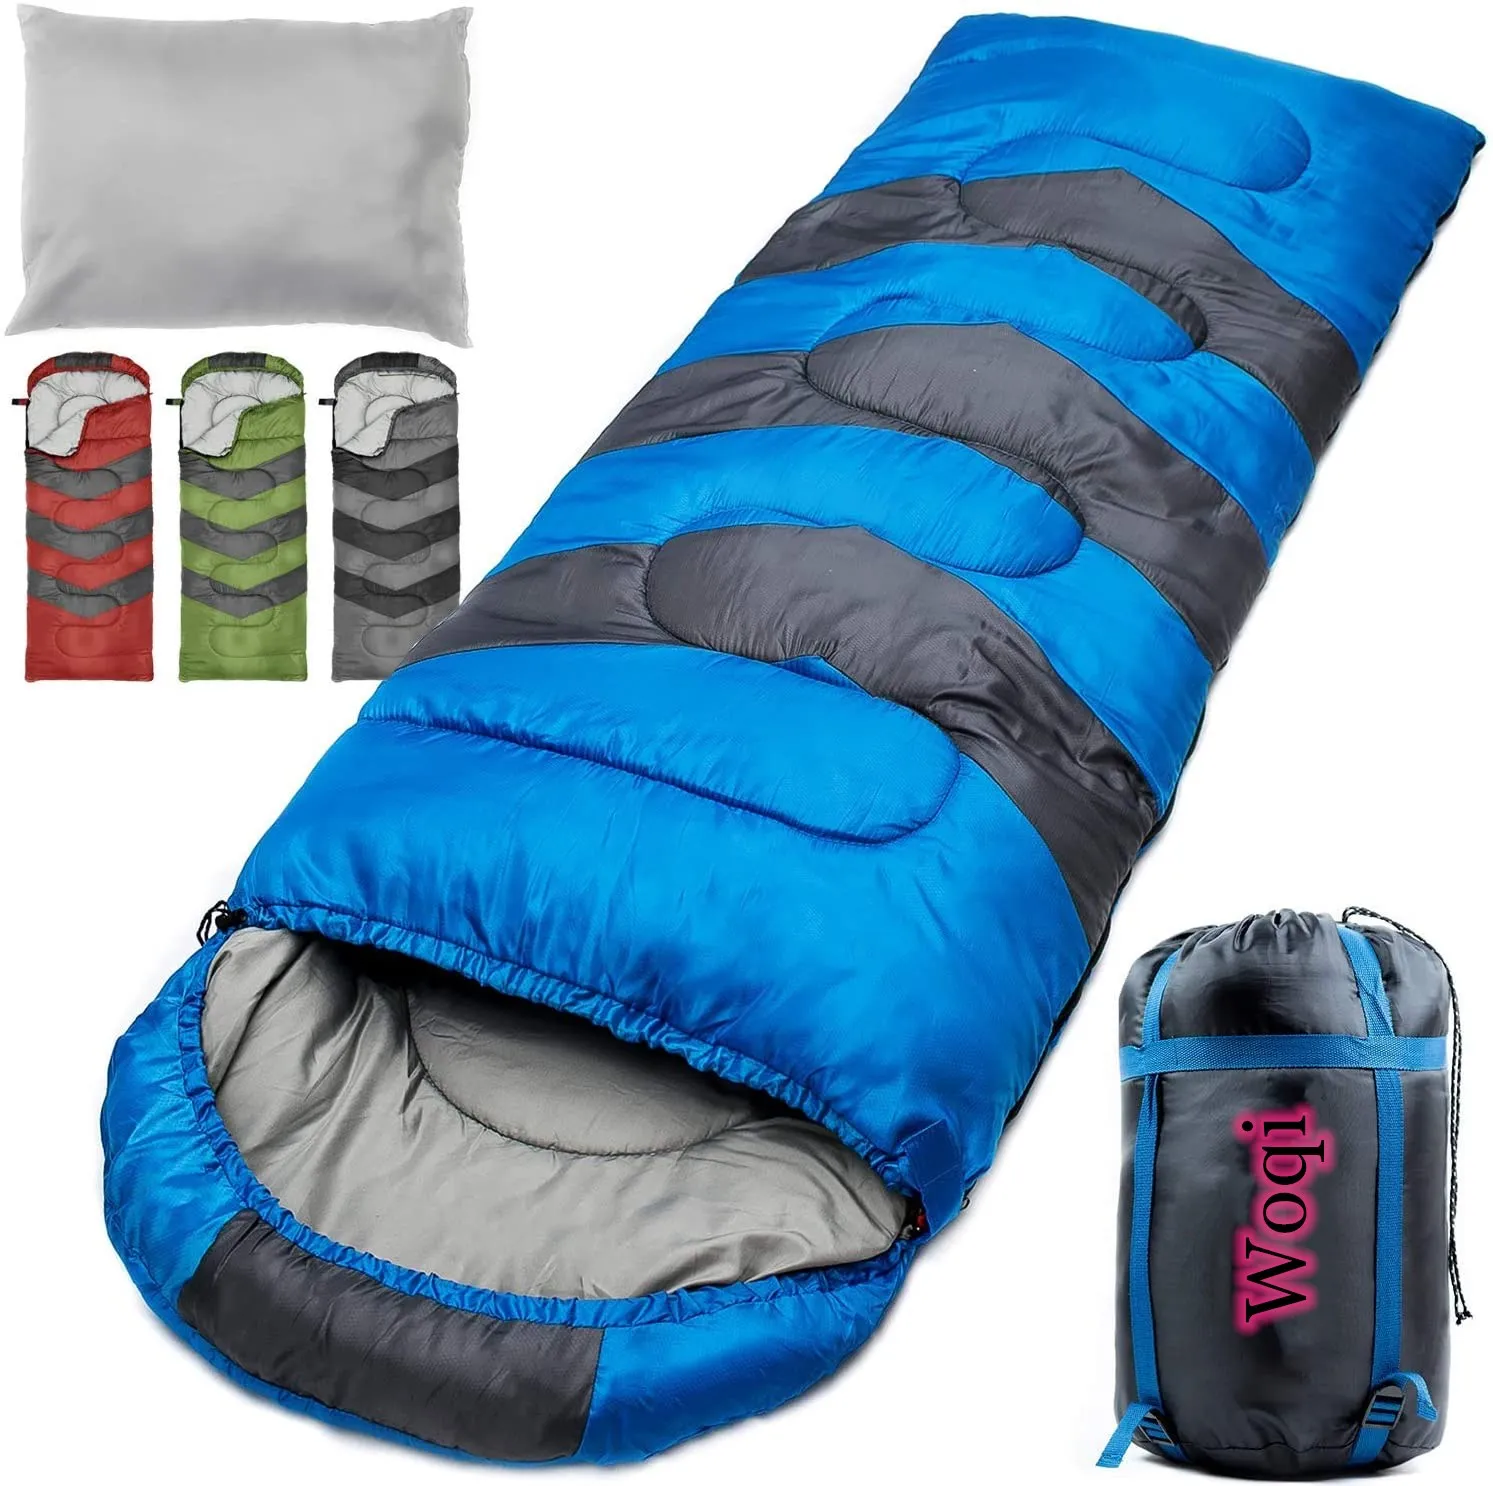 

Woqi 2021 Travel hot sell 4 Season Sleeping Bag warm camping sleeping bag with compression sack, Dark blue,gray,black,yellow....